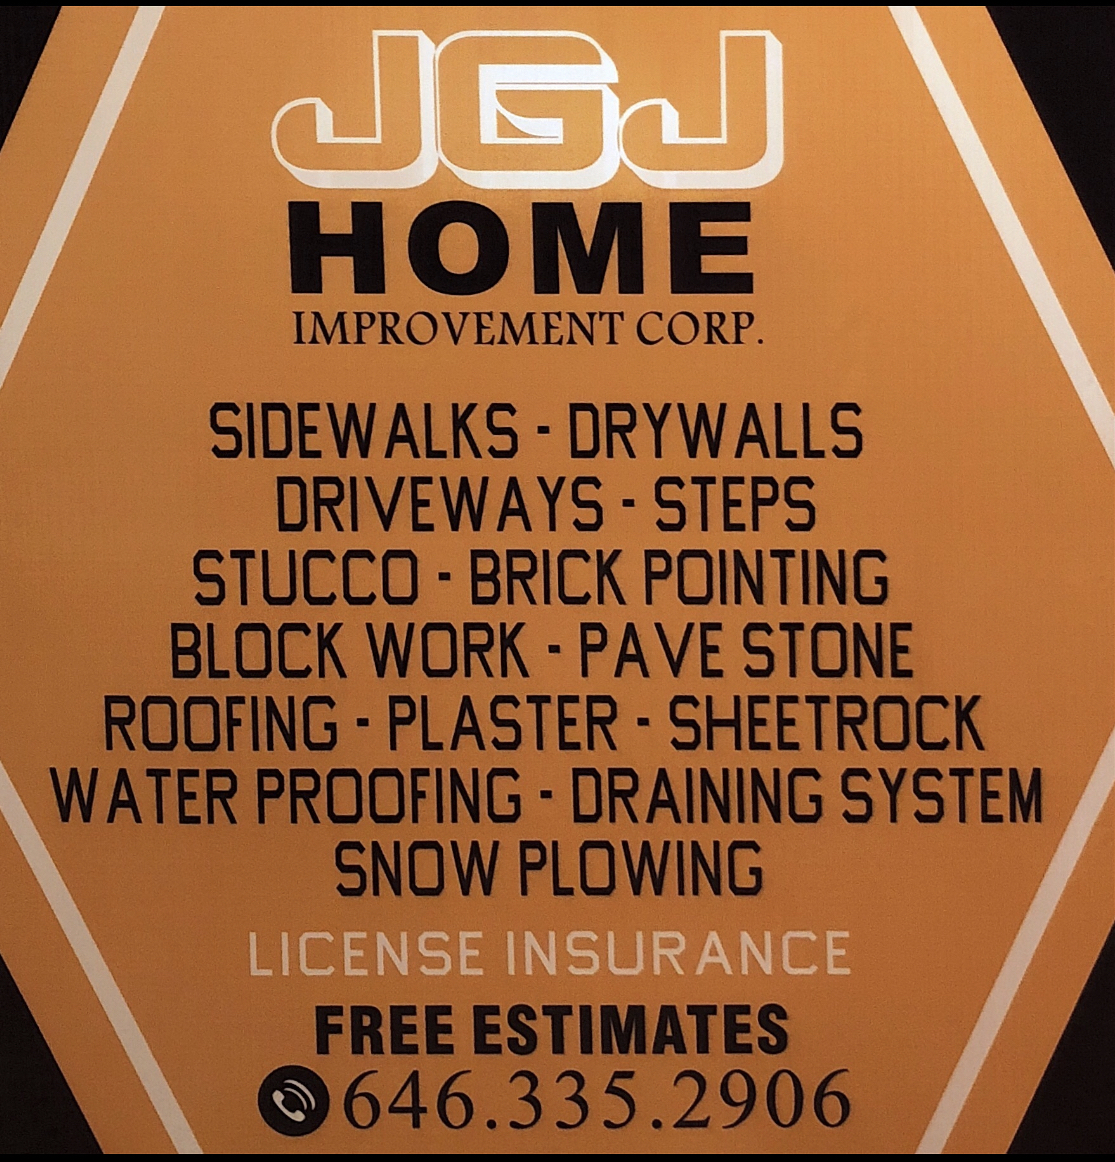 J.G.J Home Improvement Corp. Logo